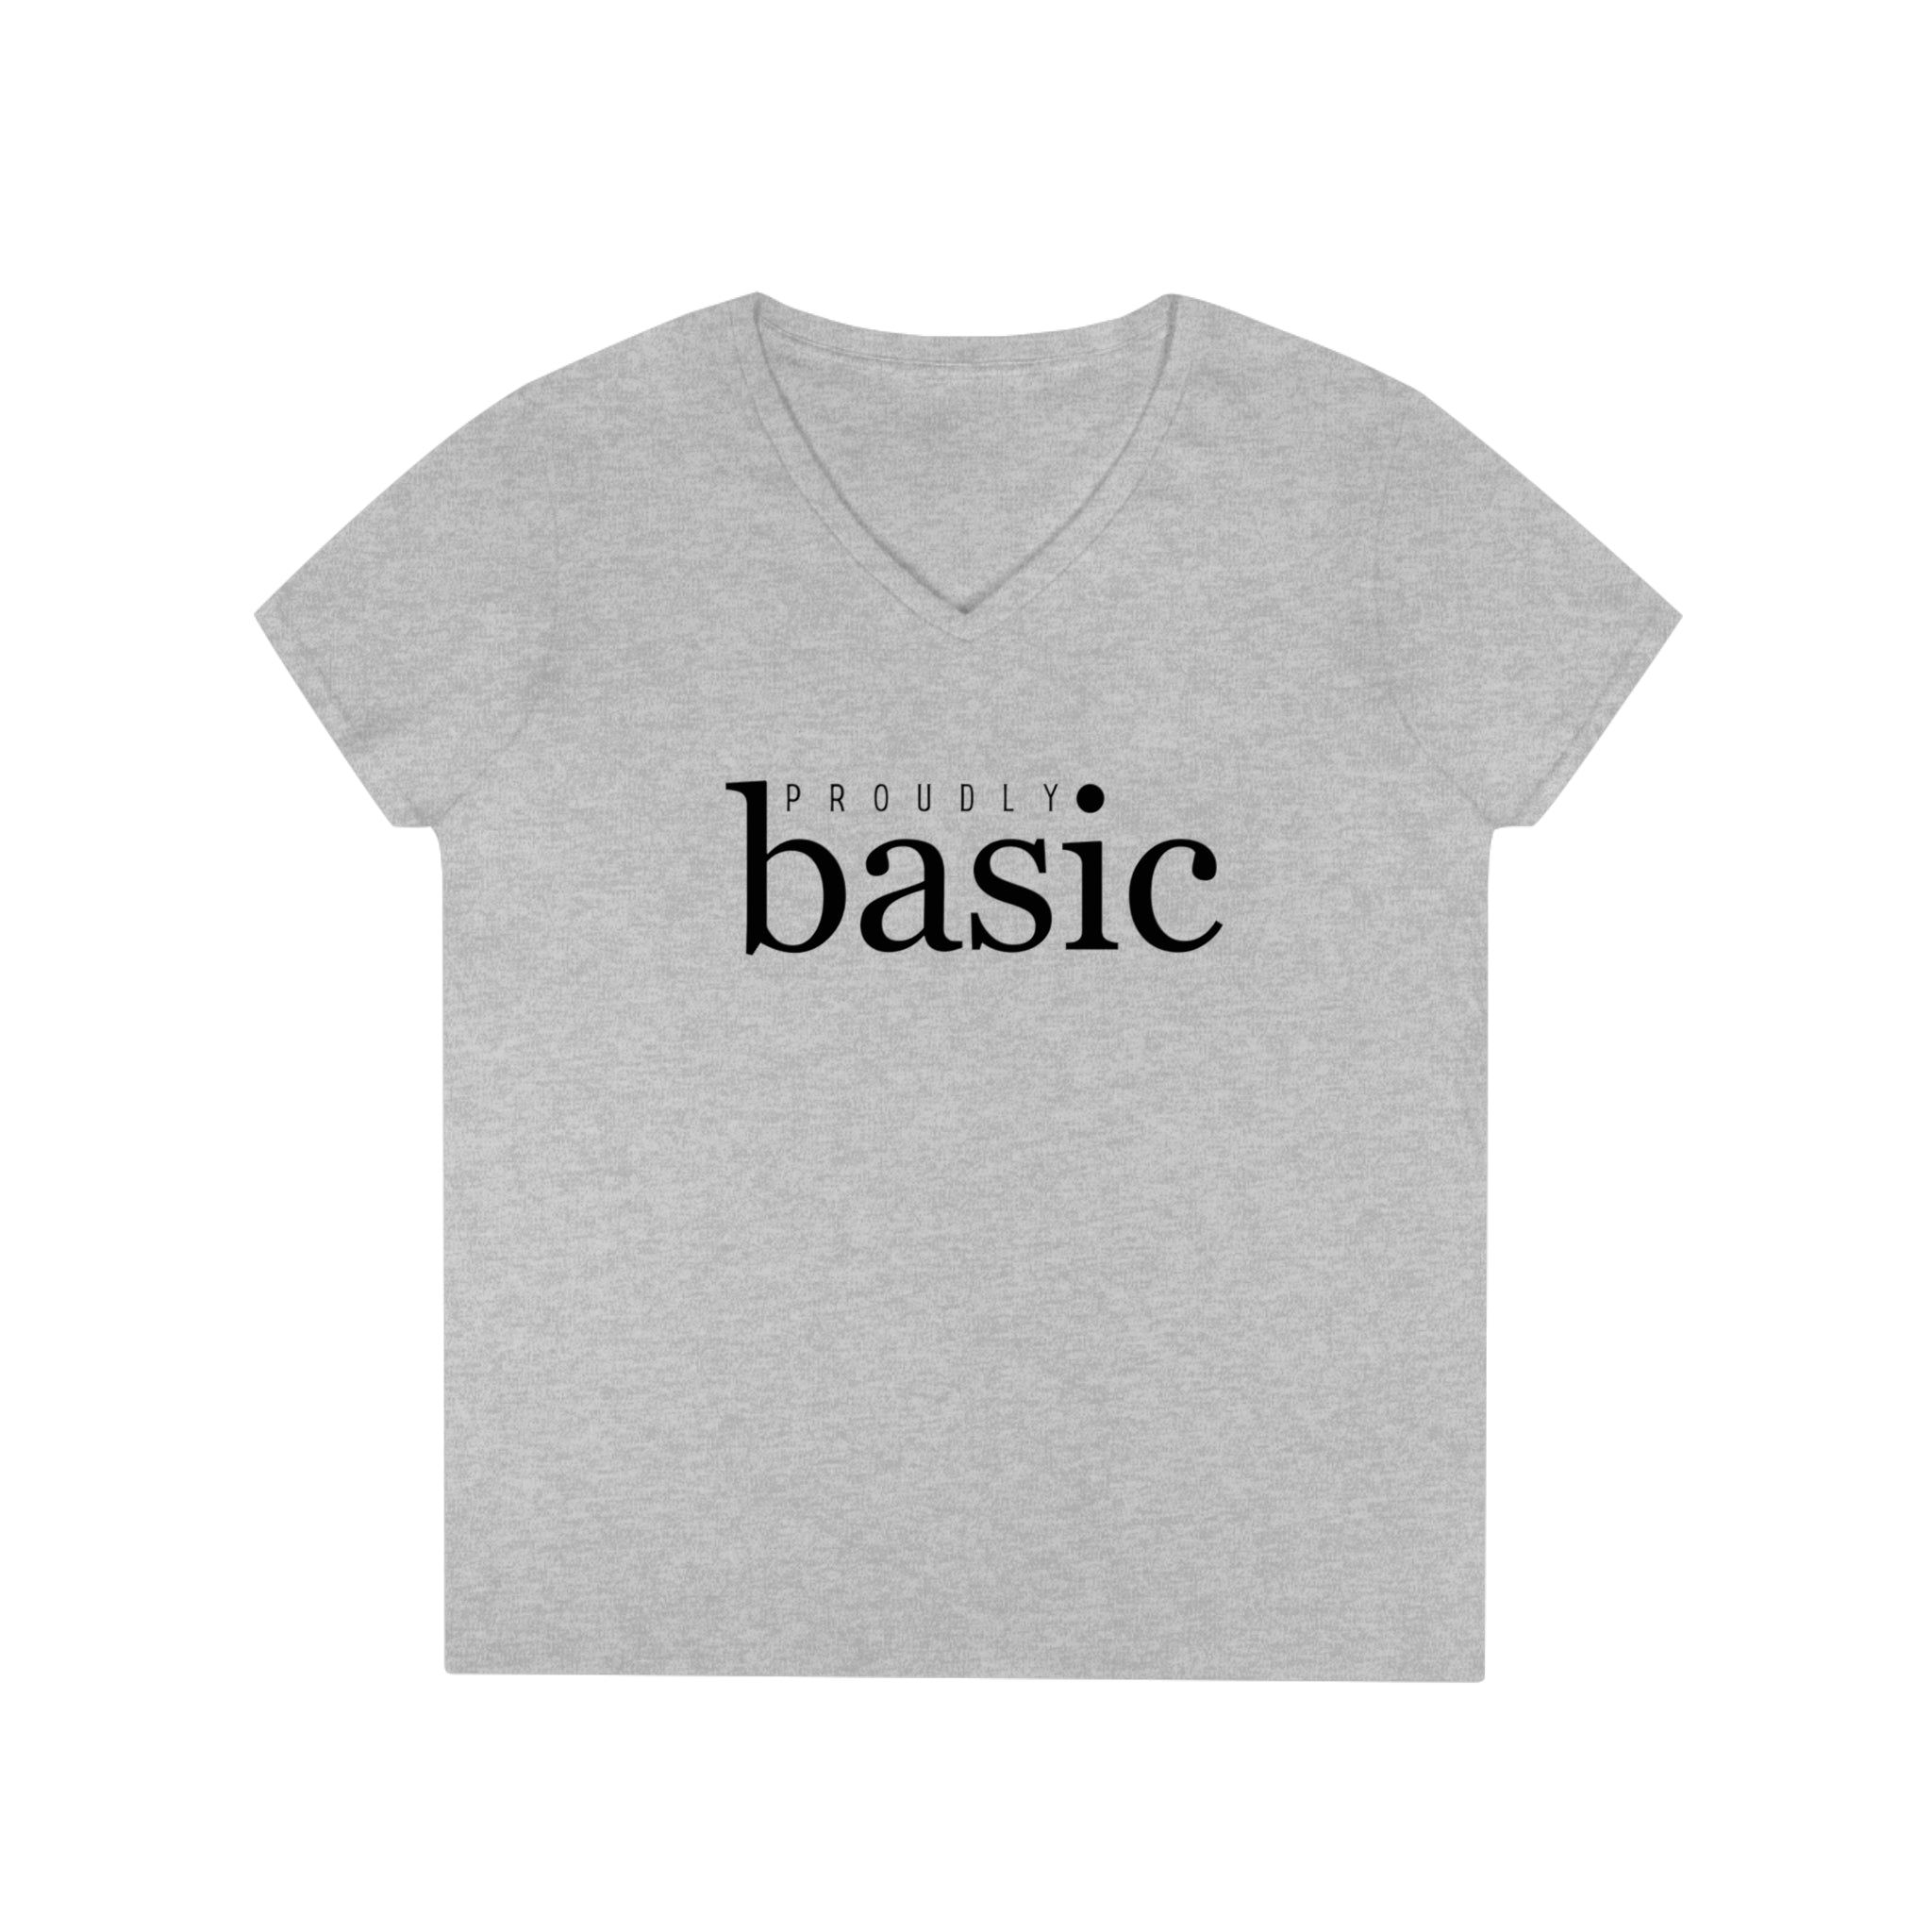  Proudly BASIC Female Empowerment Women's V Neck T-shirt, Feminist Graphic Tee, Cute Women's T-shirt V-neck2XLSportGrey